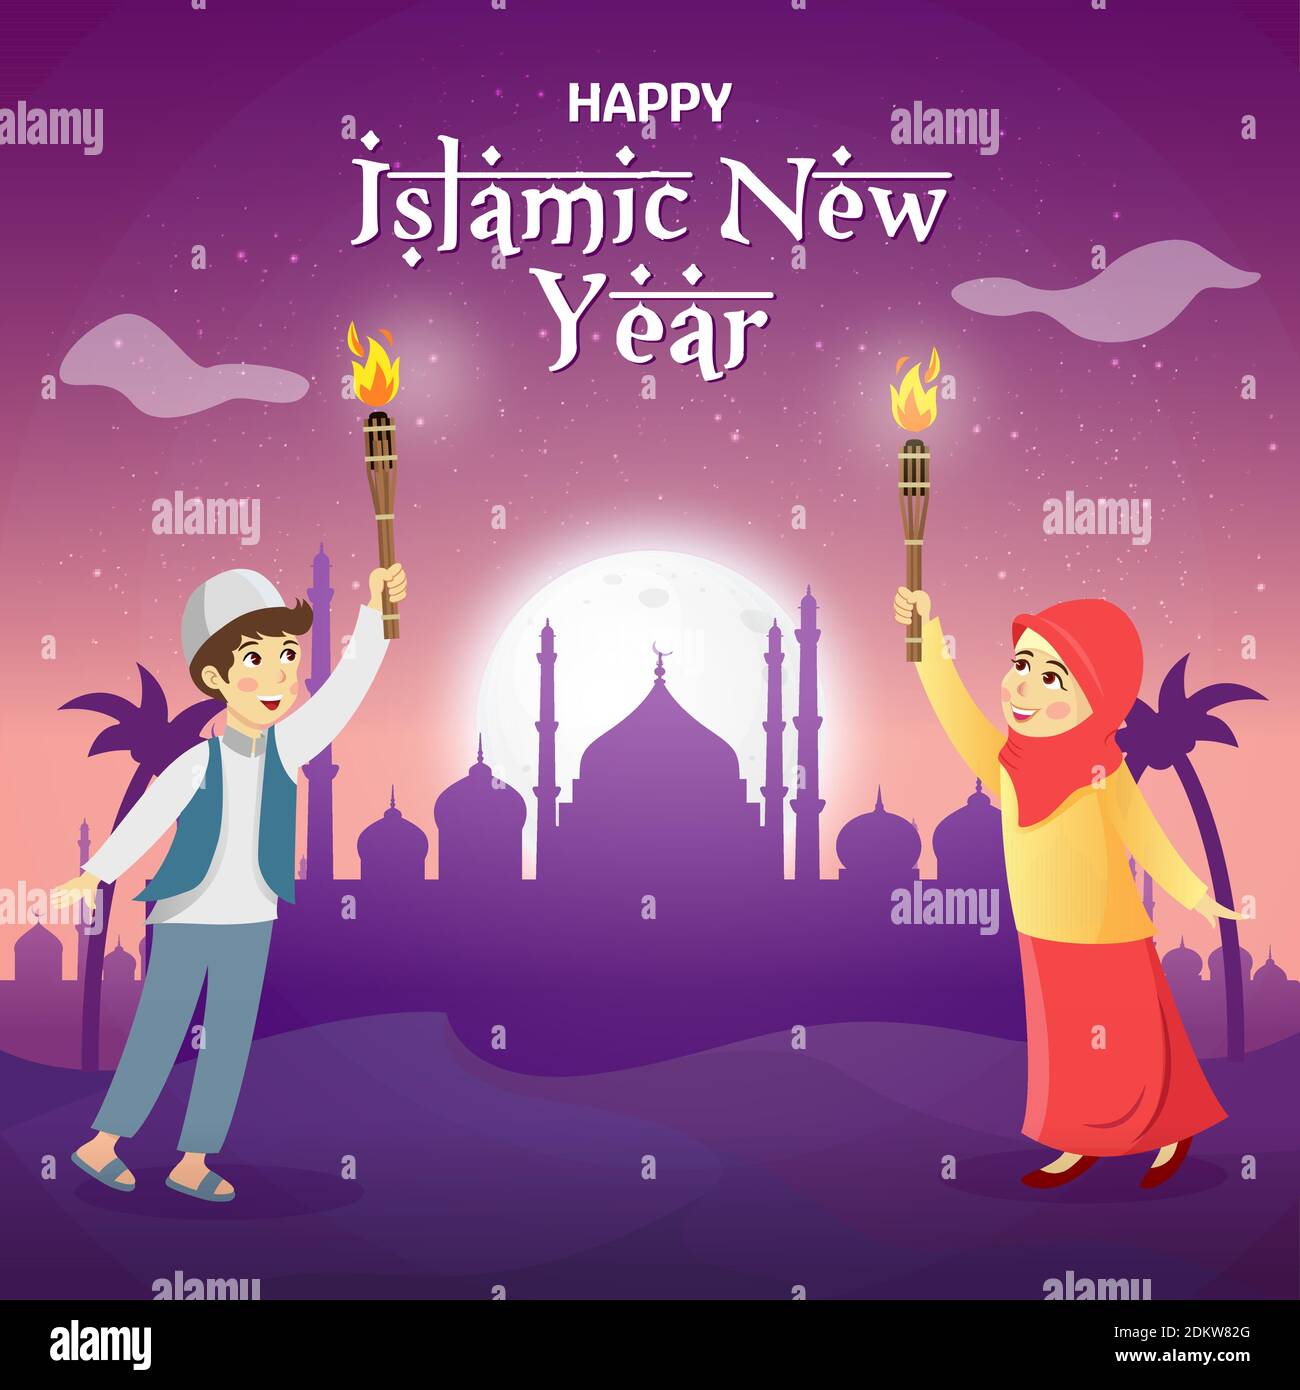 Happy islamic new year vector illustration. Cute cartoon muslim kids